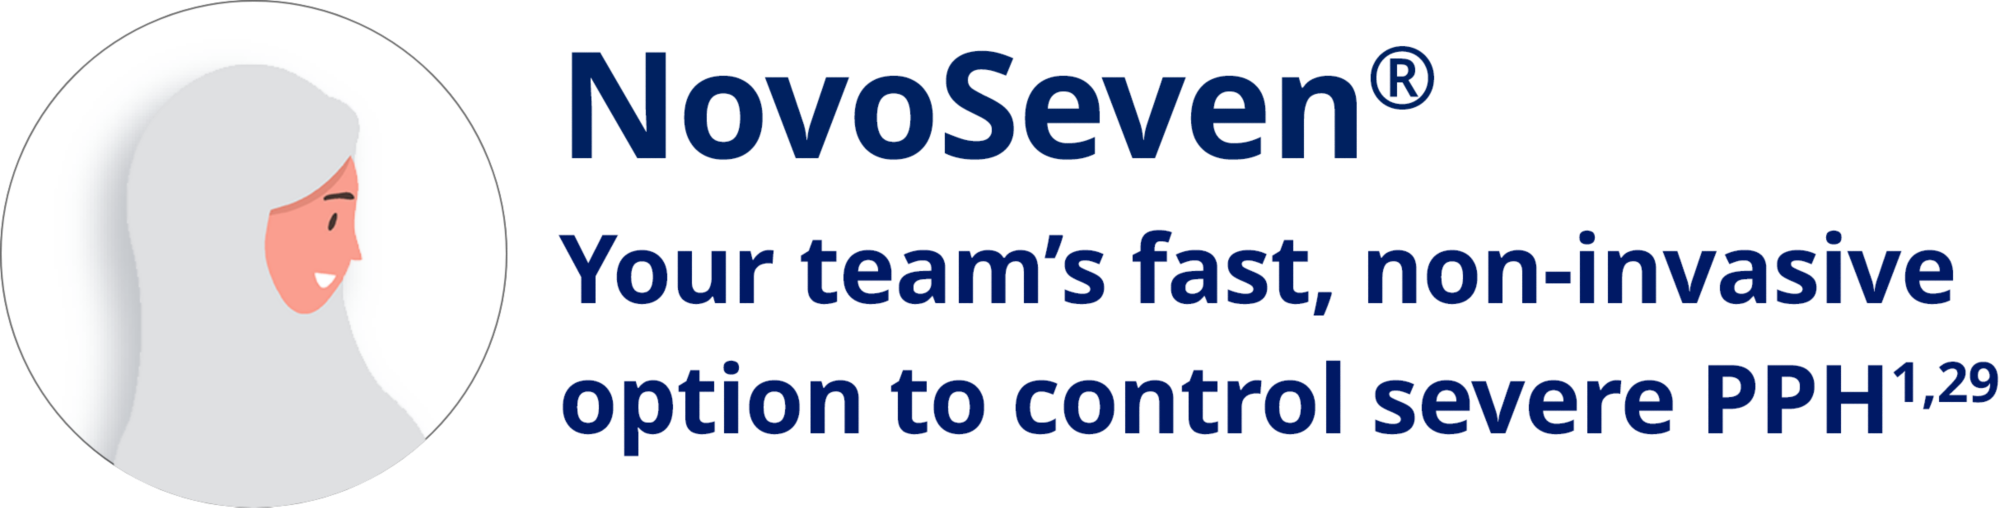 Your team’s fast, non-invasive option